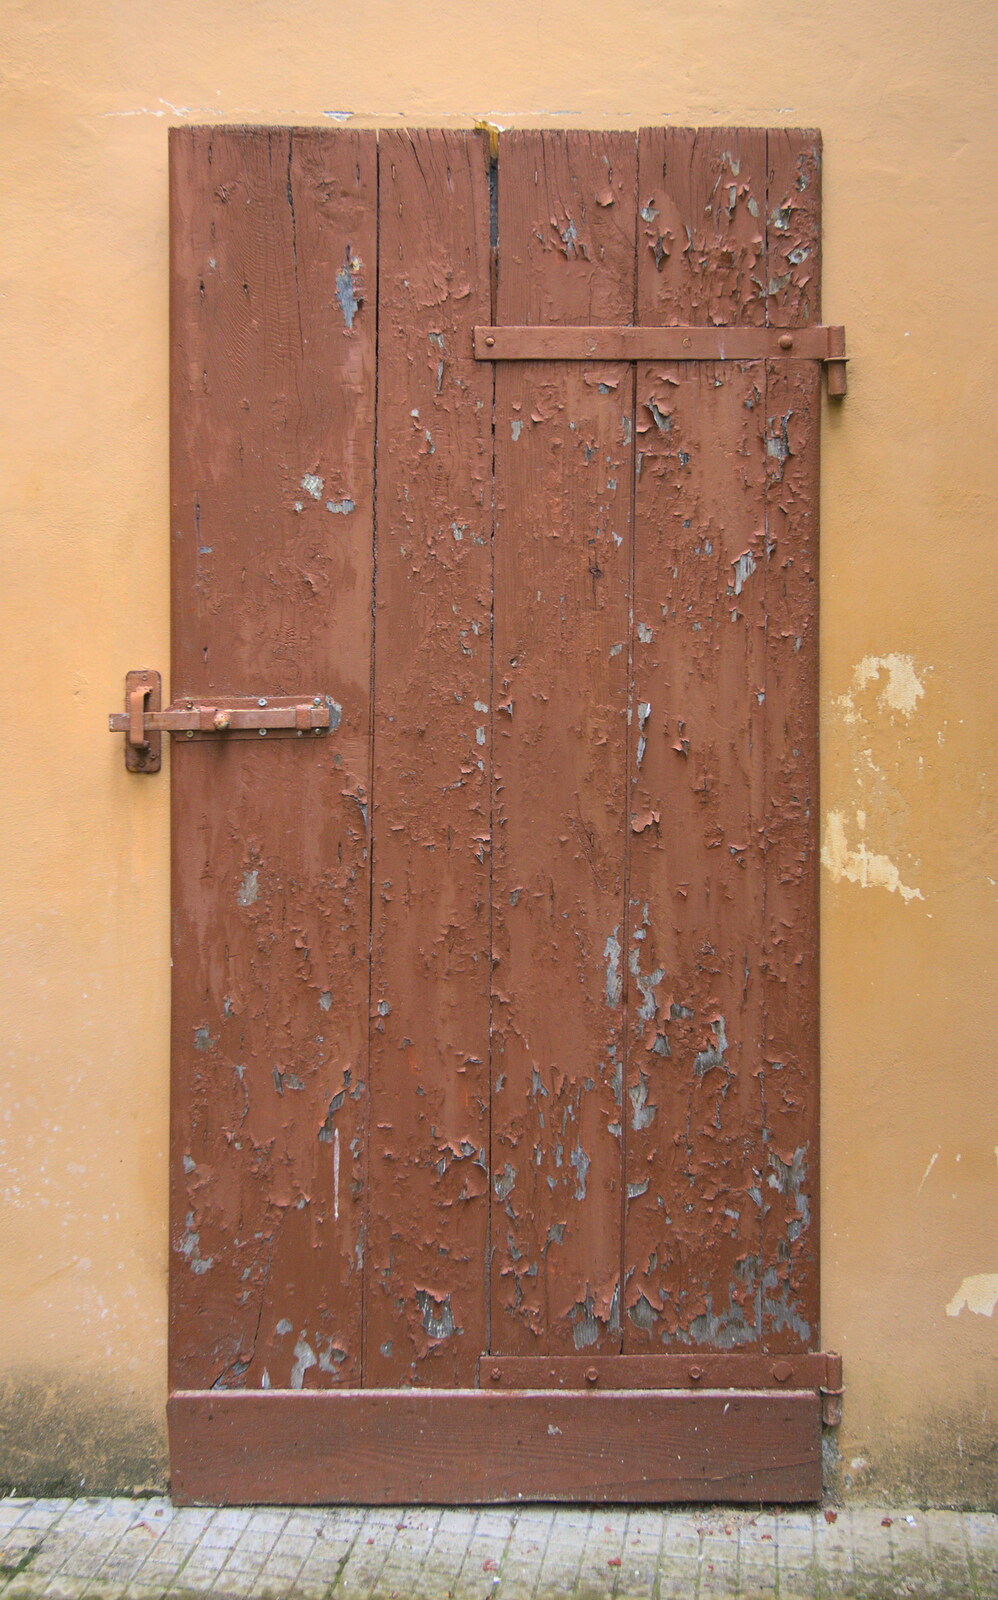 Marconi, Arezzo and the Sagra del Maccherone Festival, Battifolle, Tuscany - 9th June 2013: Peeling paint on a door